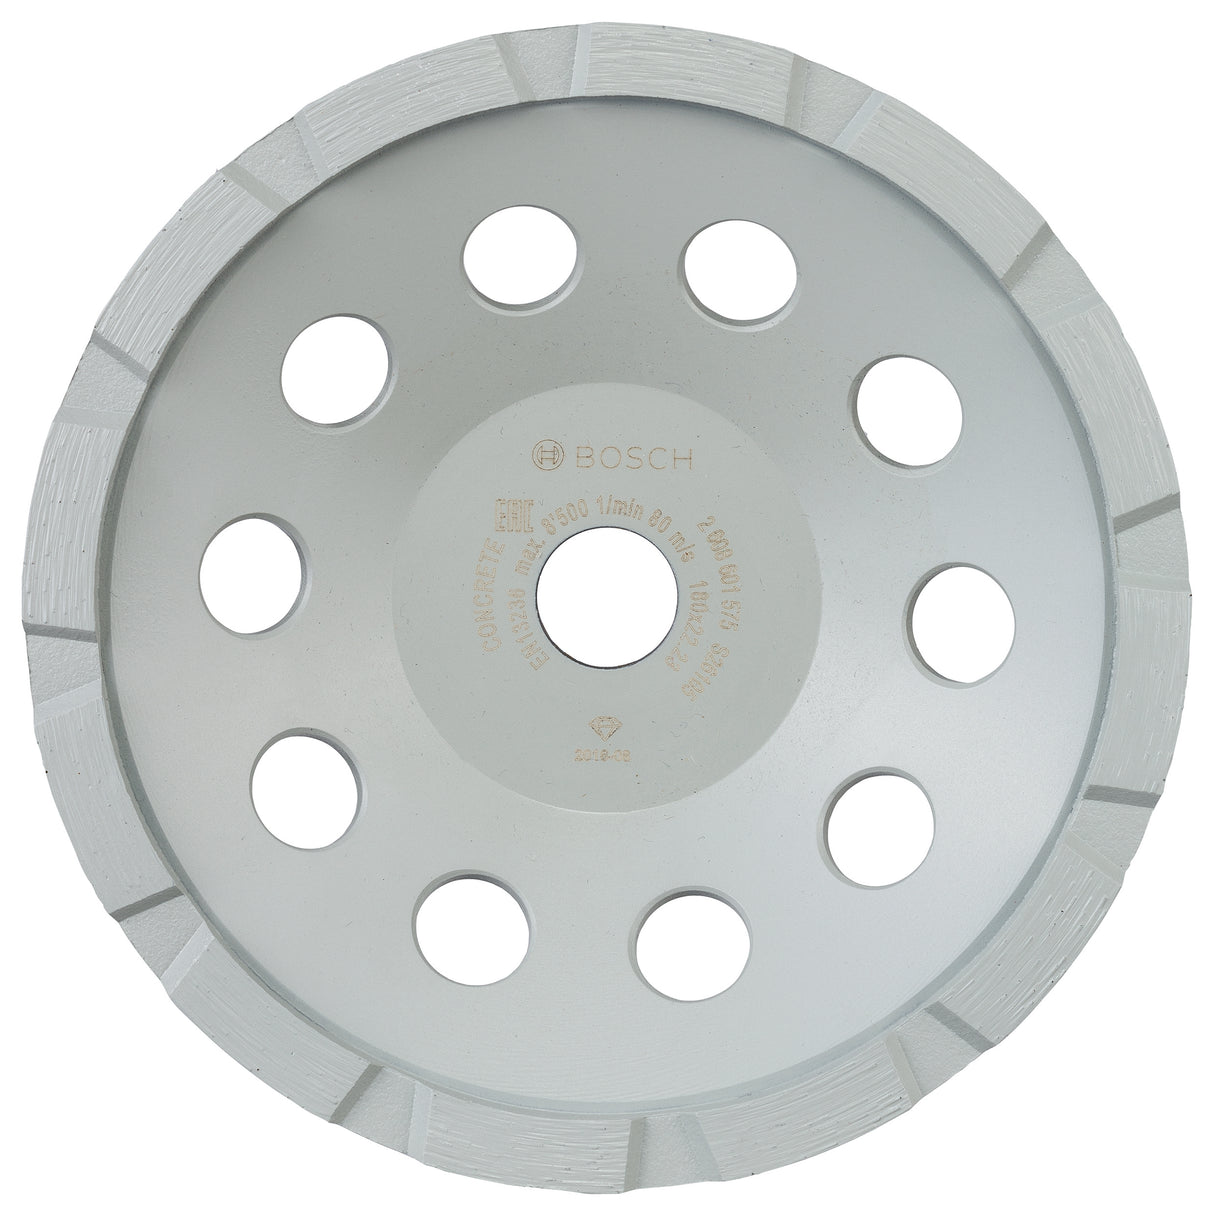 Bosch Professional Diamond Cup Wheel - Standard for Concrete - 180x22.23x5